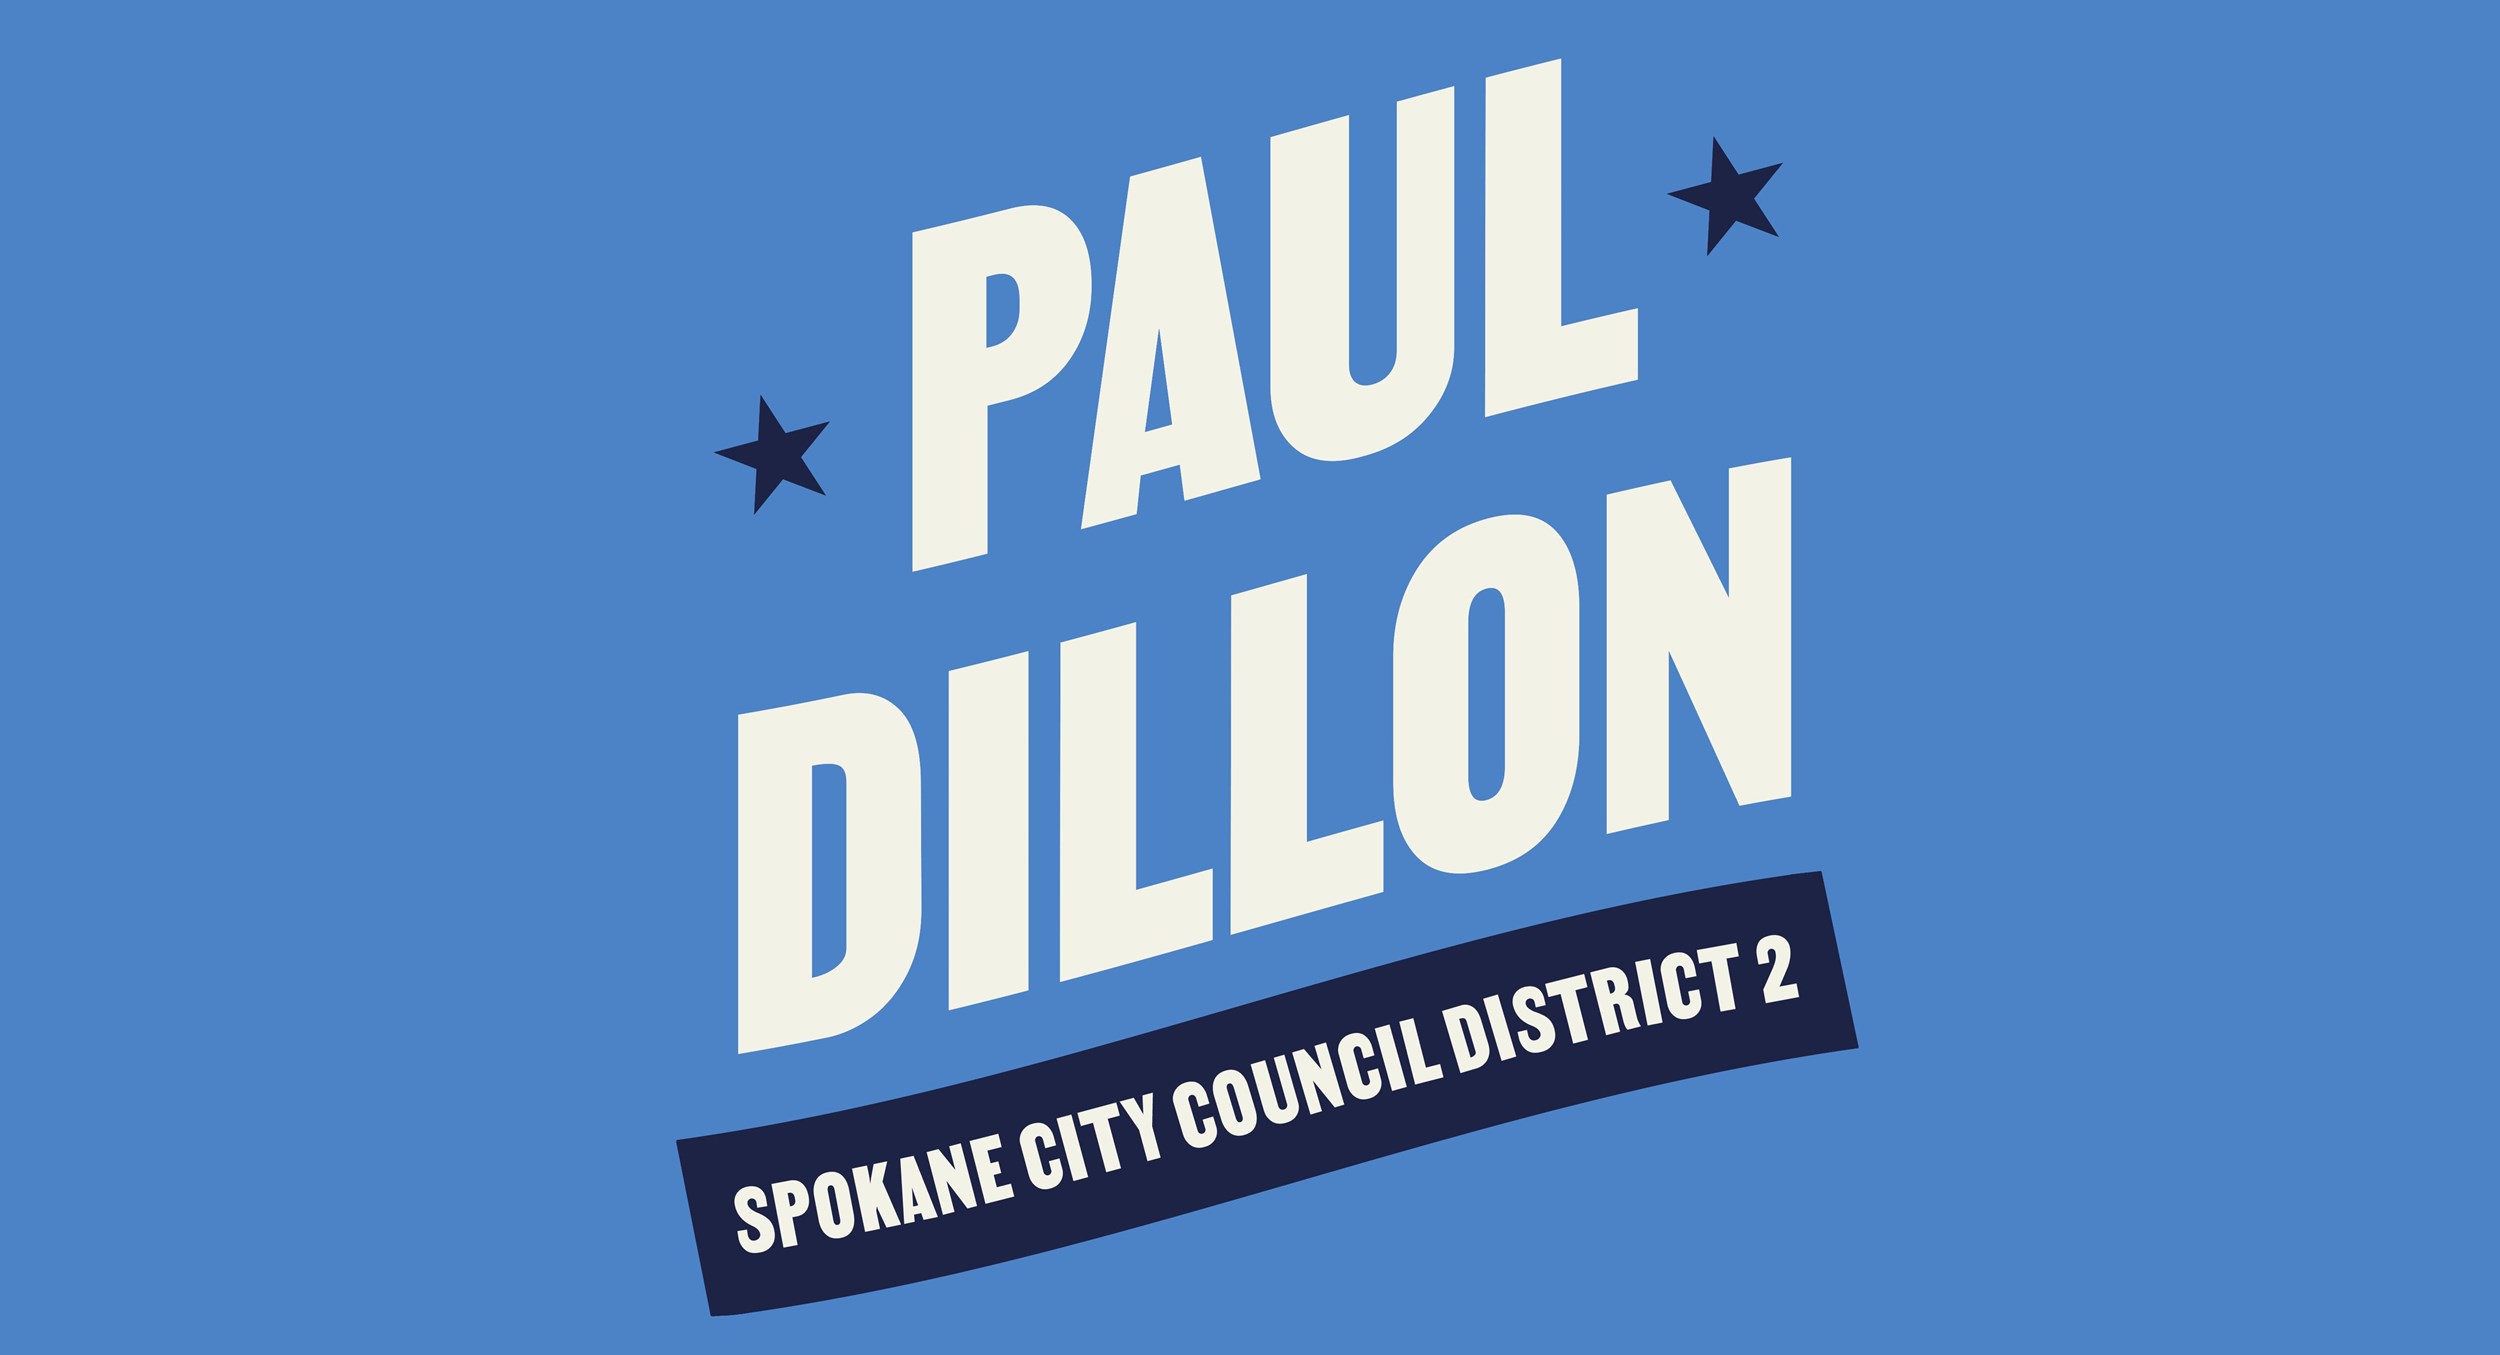 Paul Dillon, Spokane City Council District 2